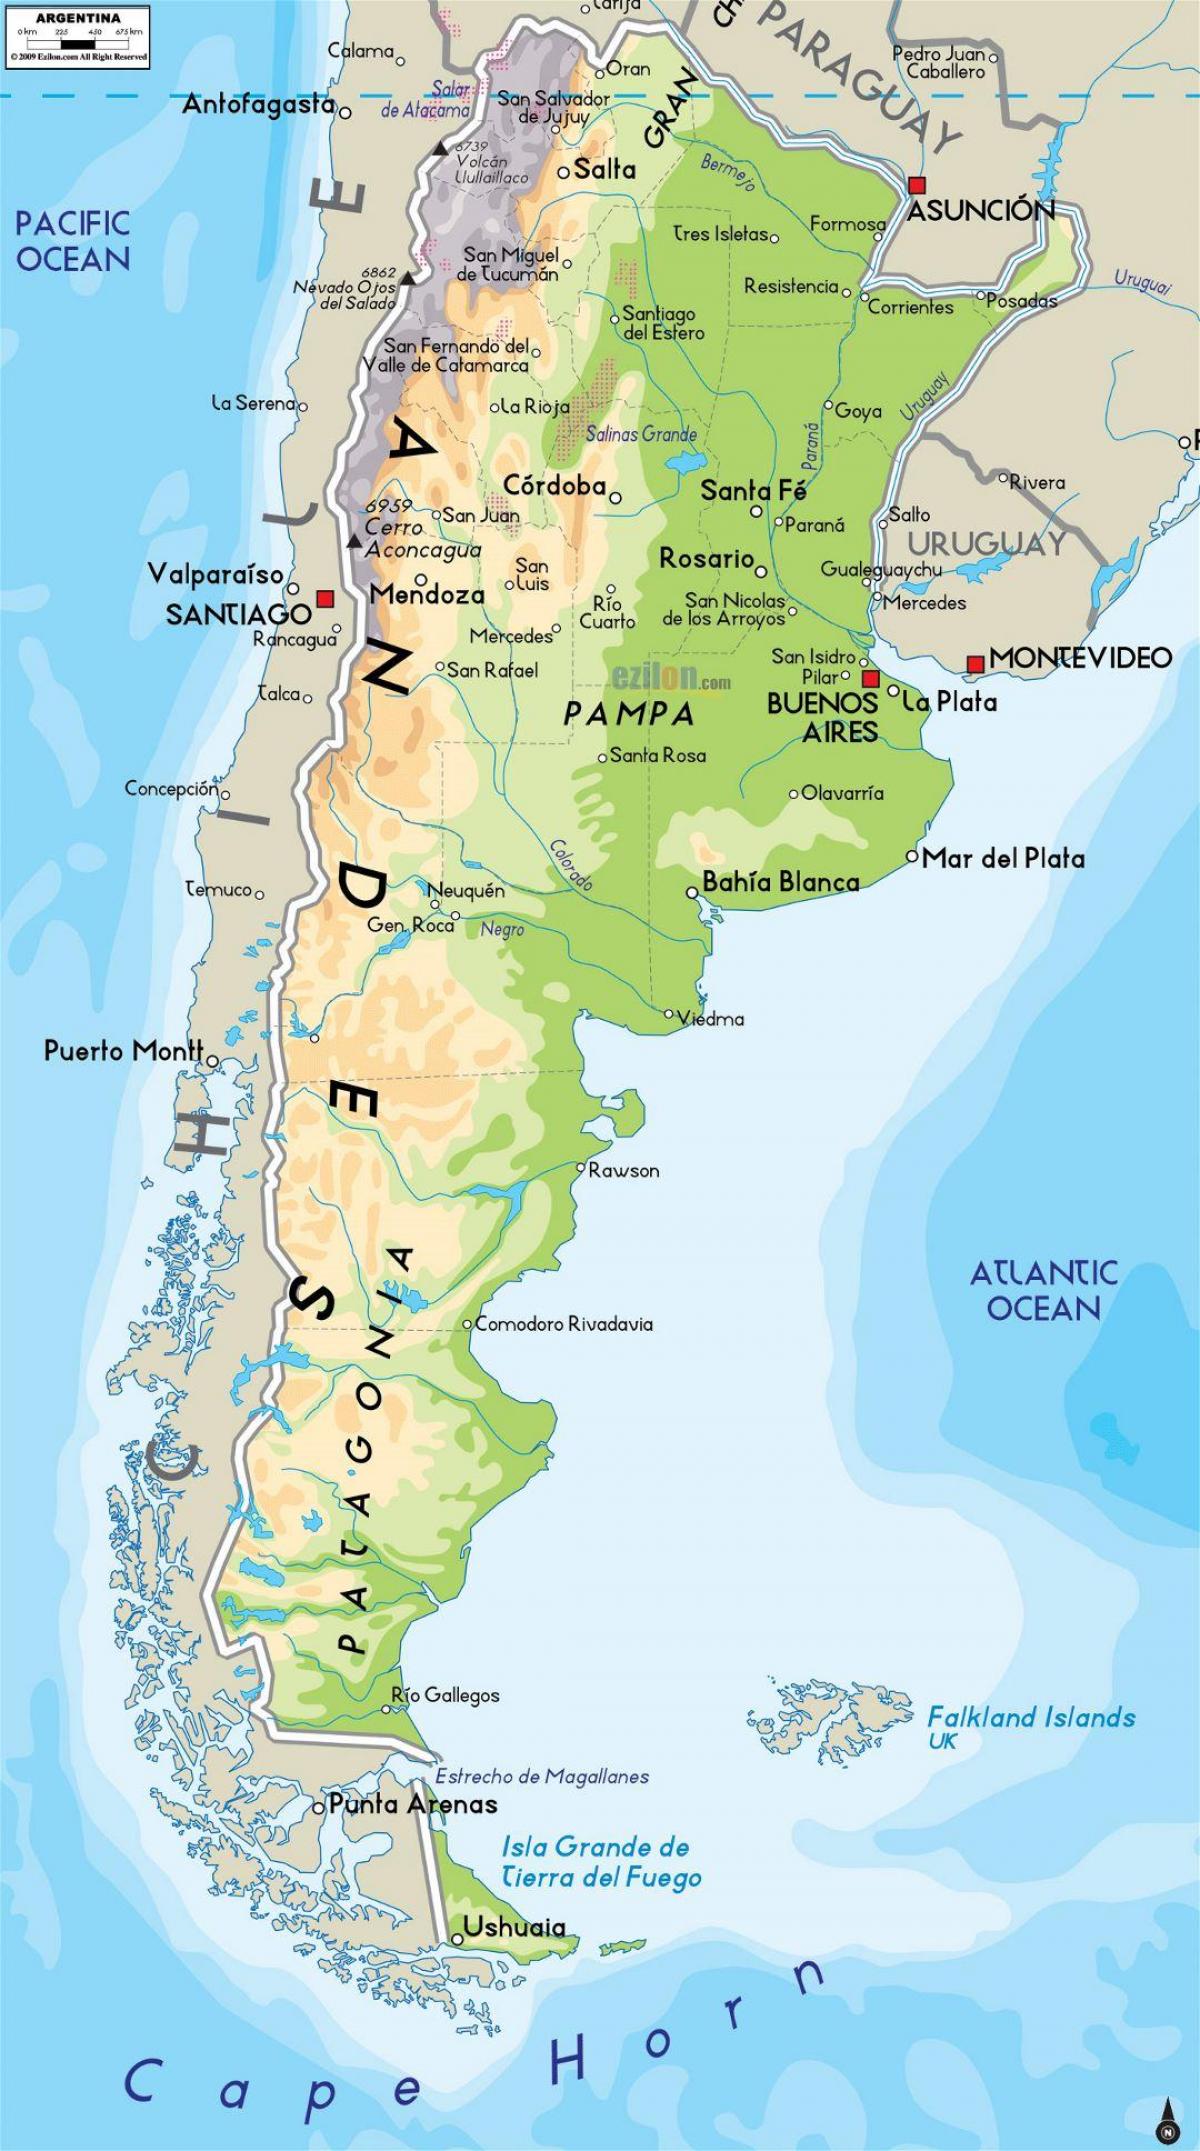 Mapa topográfico da Argentina